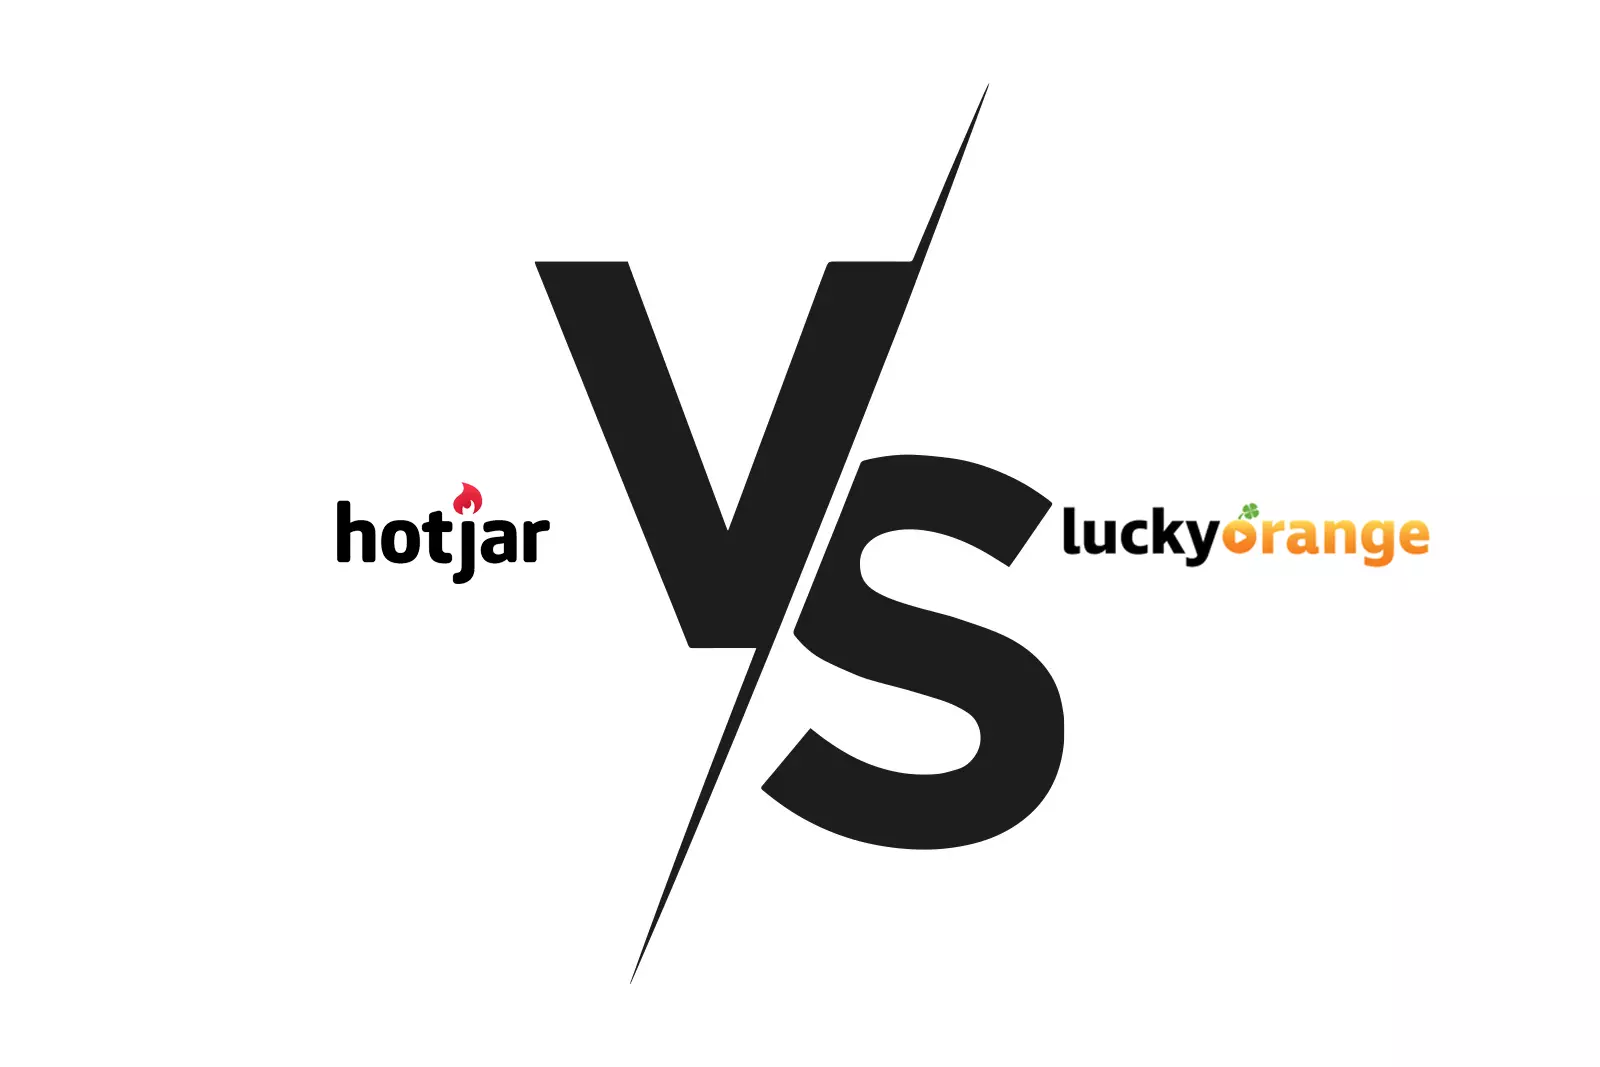 We Tried Hotjar vs Lucky Orange: Here’s Our Feedback